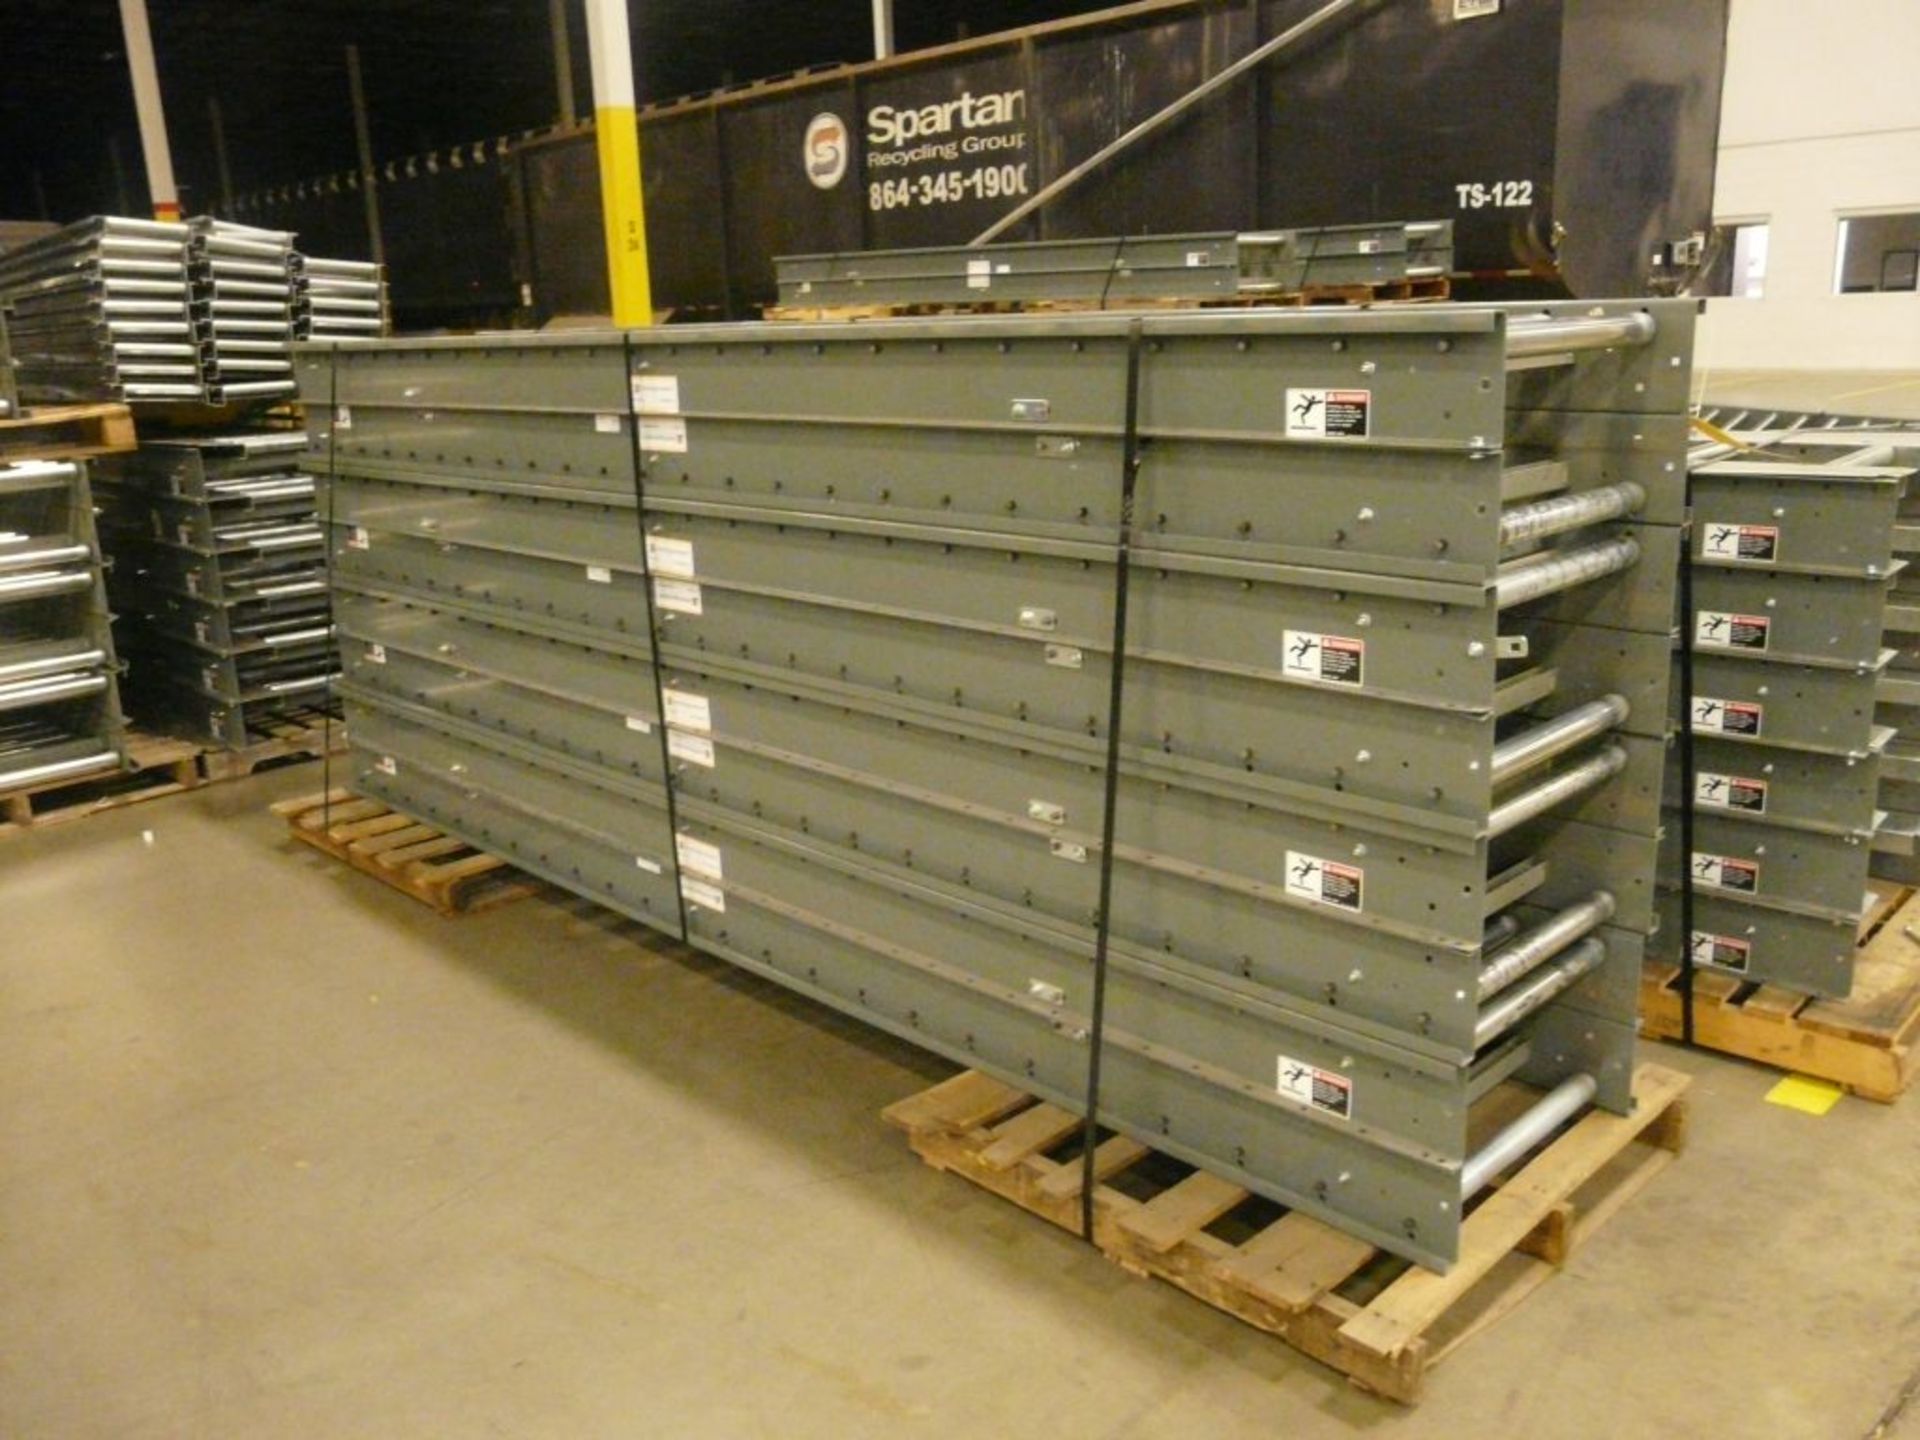 Lot of (8) 200 Belt Intermediate Conveyors - 12'L x 22"W; Tag: 223693 - $30 Lot Loading Fee